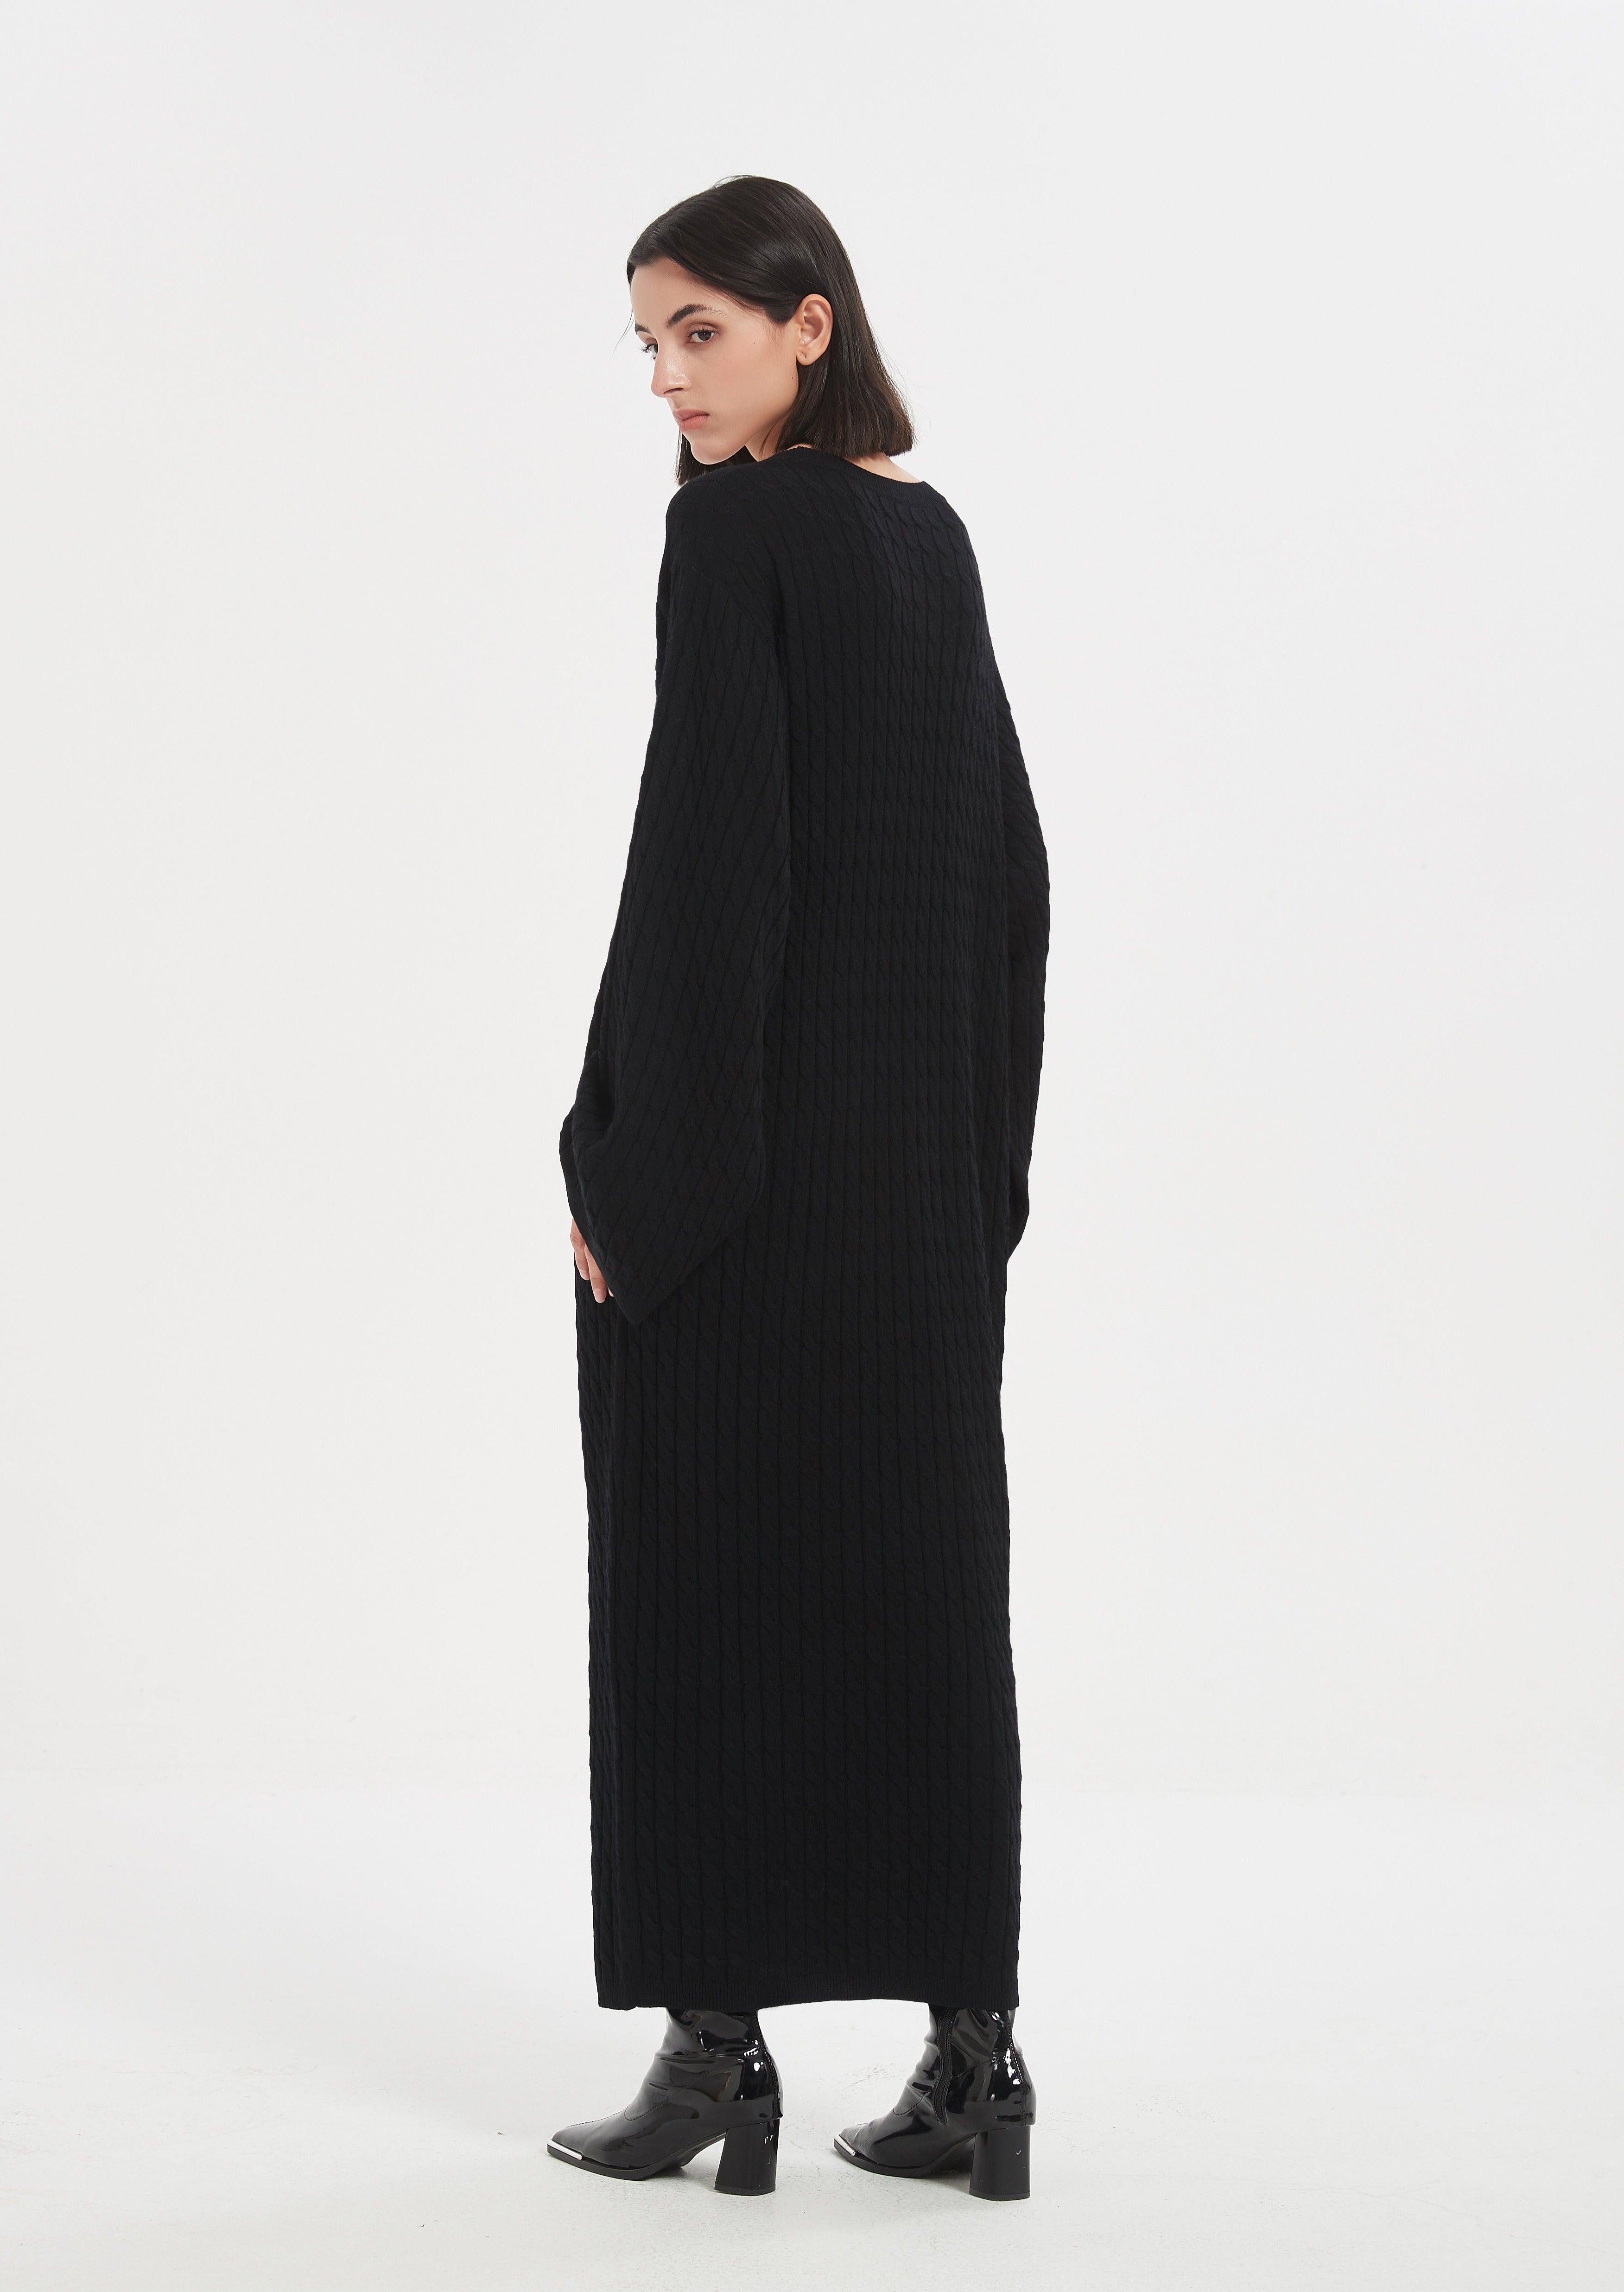 Hawa Cable Knit Dress - Black